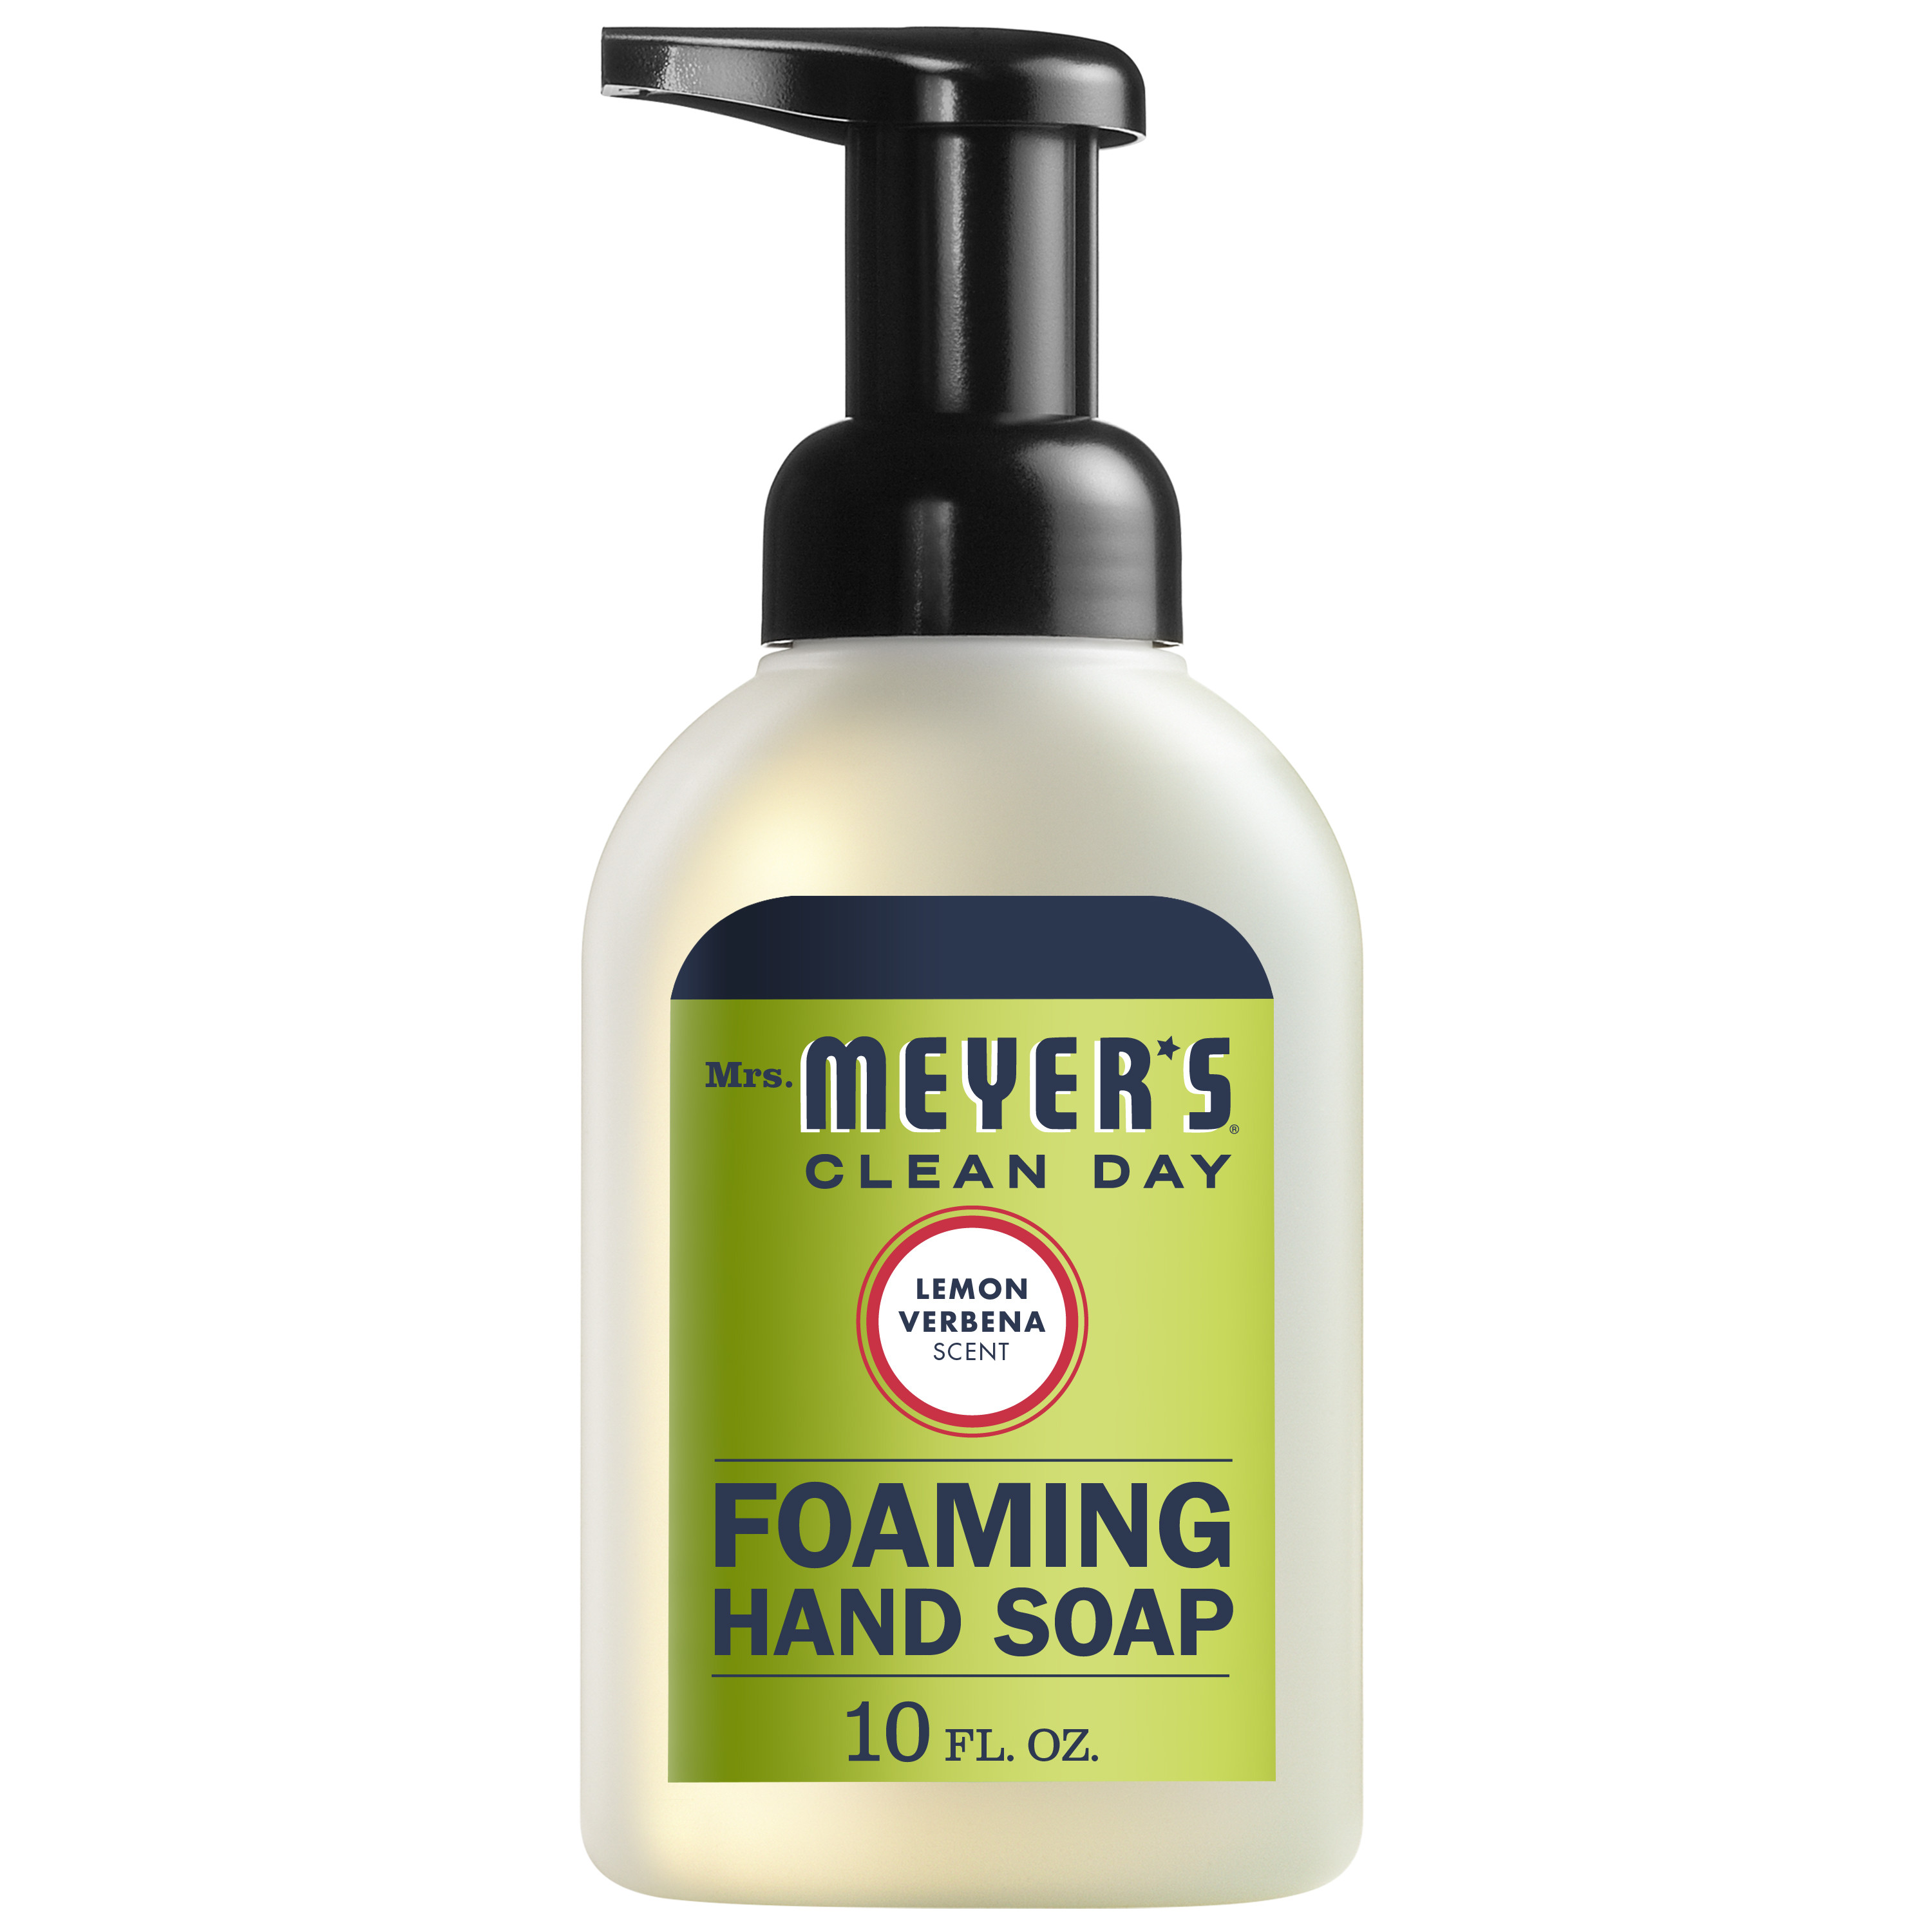 Mrs. Meyer's Clean Day Foaming Hand Soap, Lemon Verbena Scent, 10 fl oz - image 3 of 5